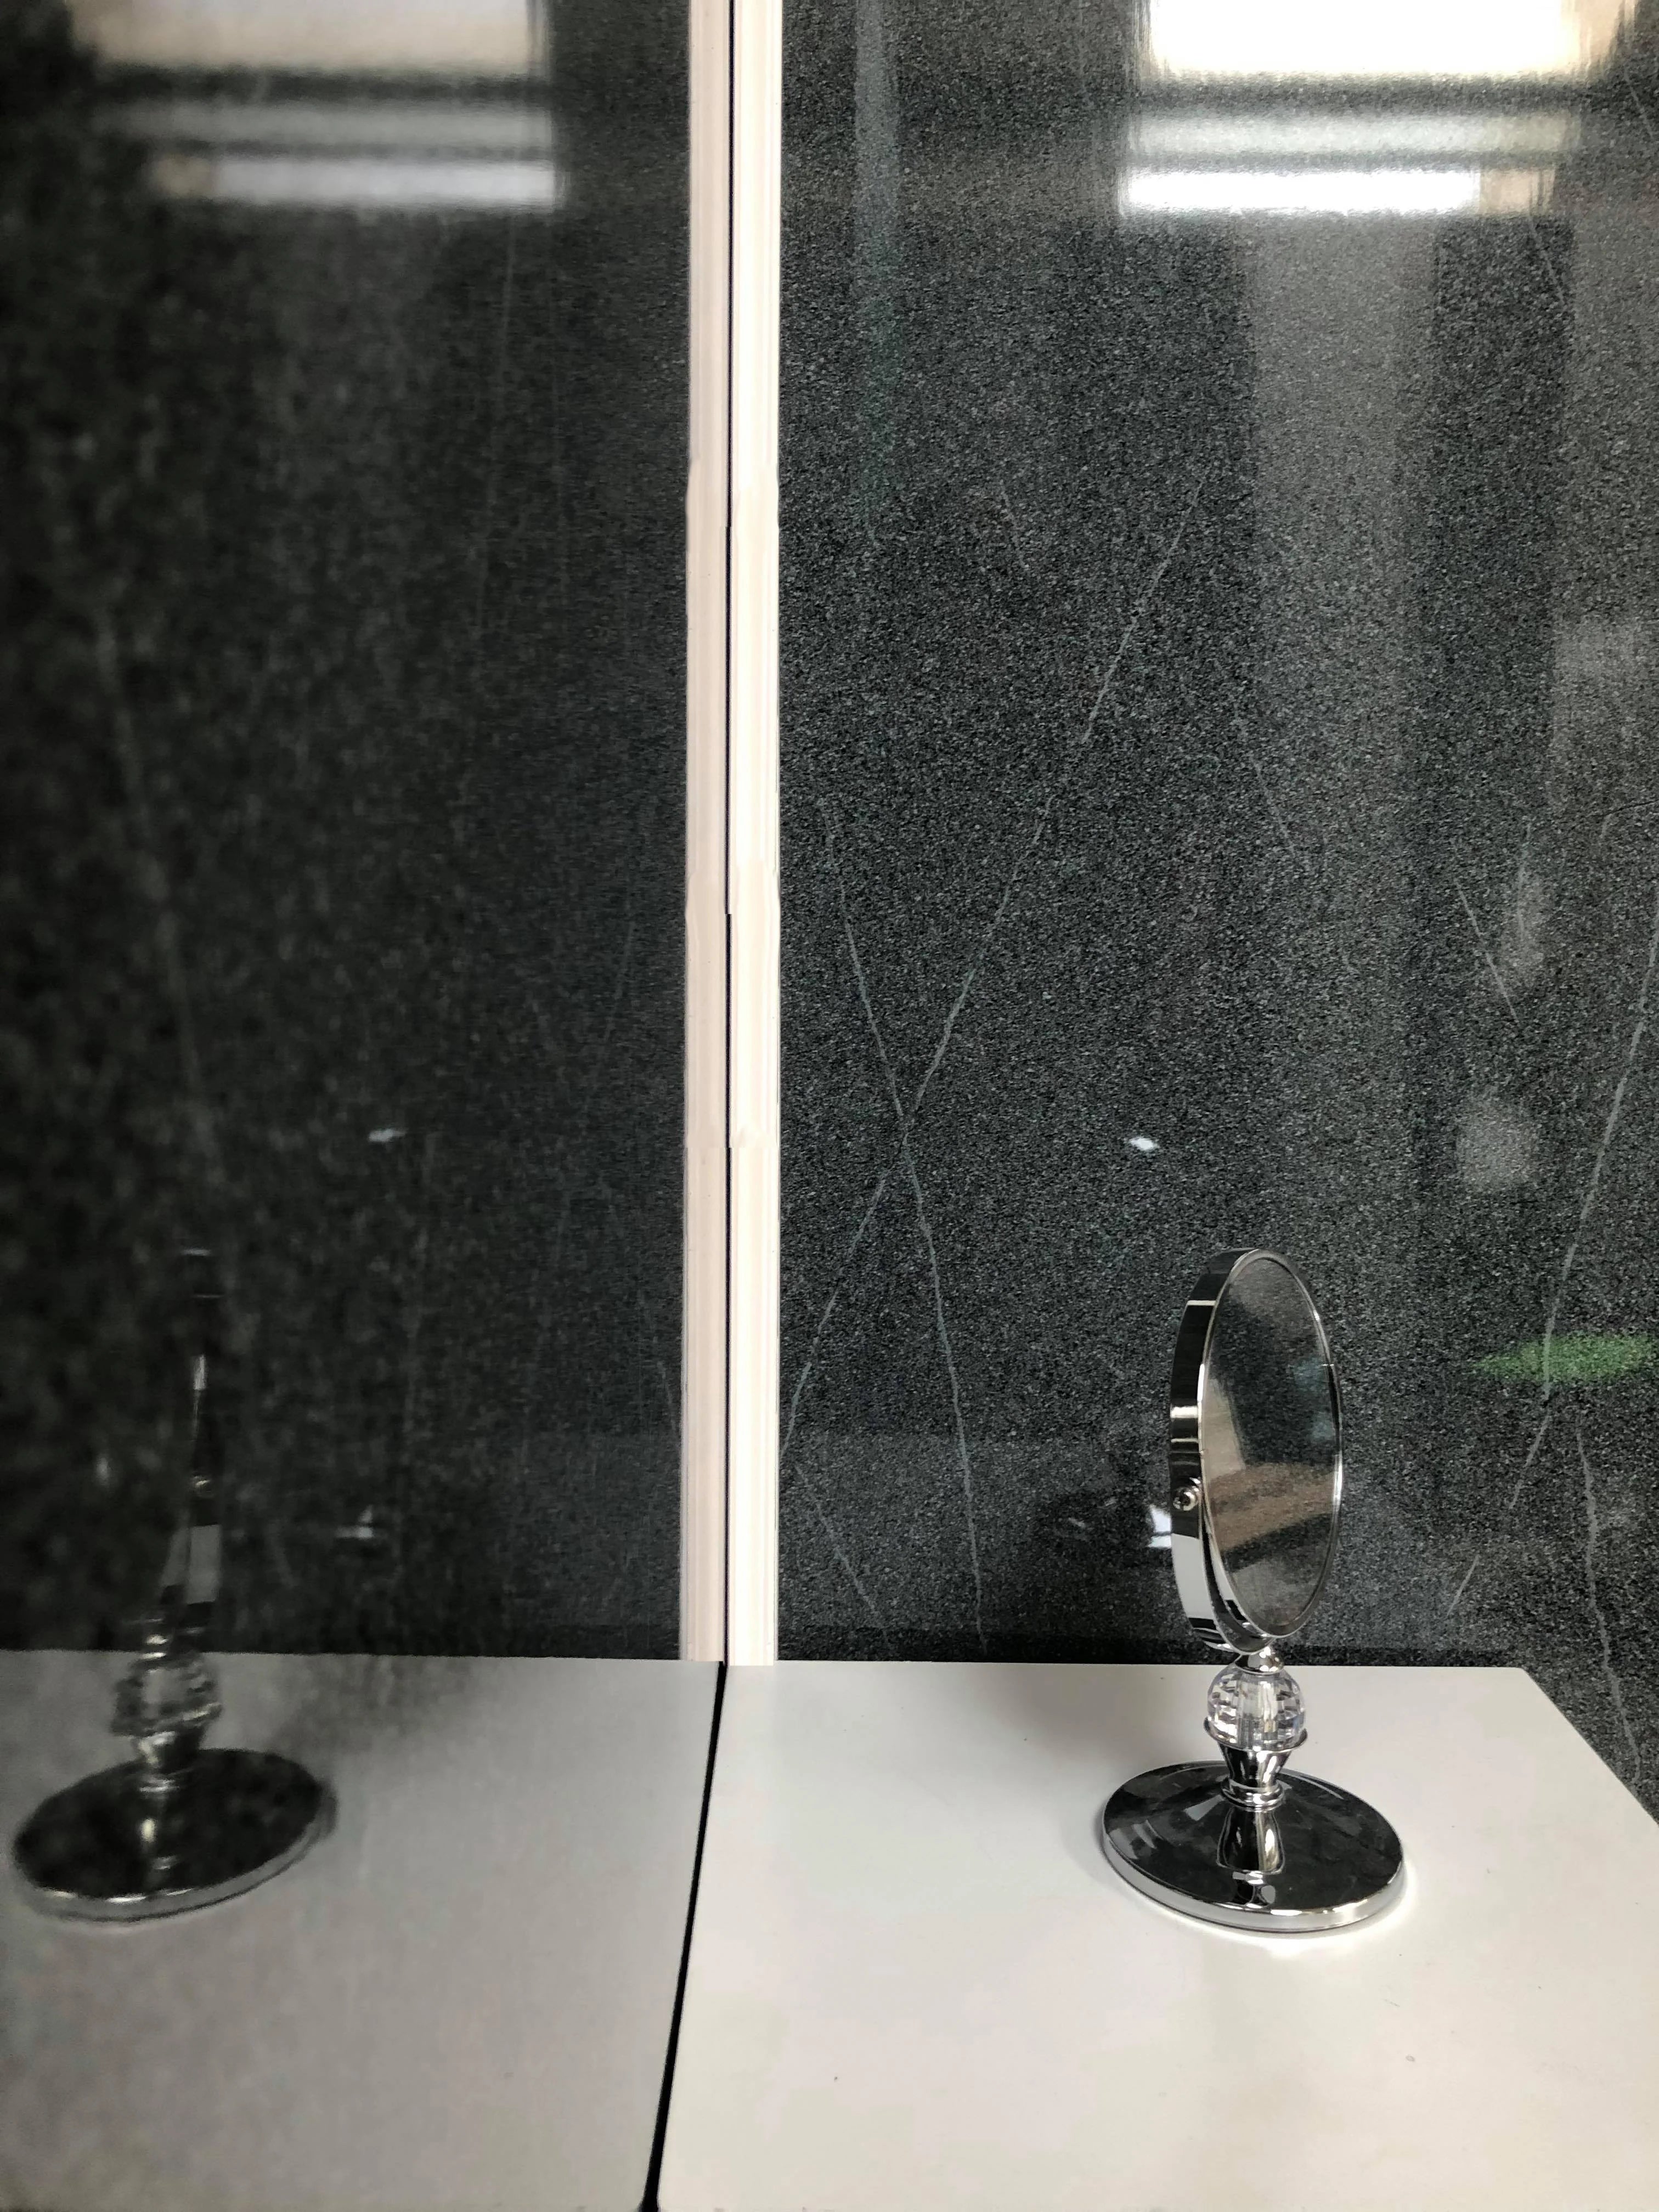 Grey Granite 10mm Bathroom Cladding Shower Wall Panels